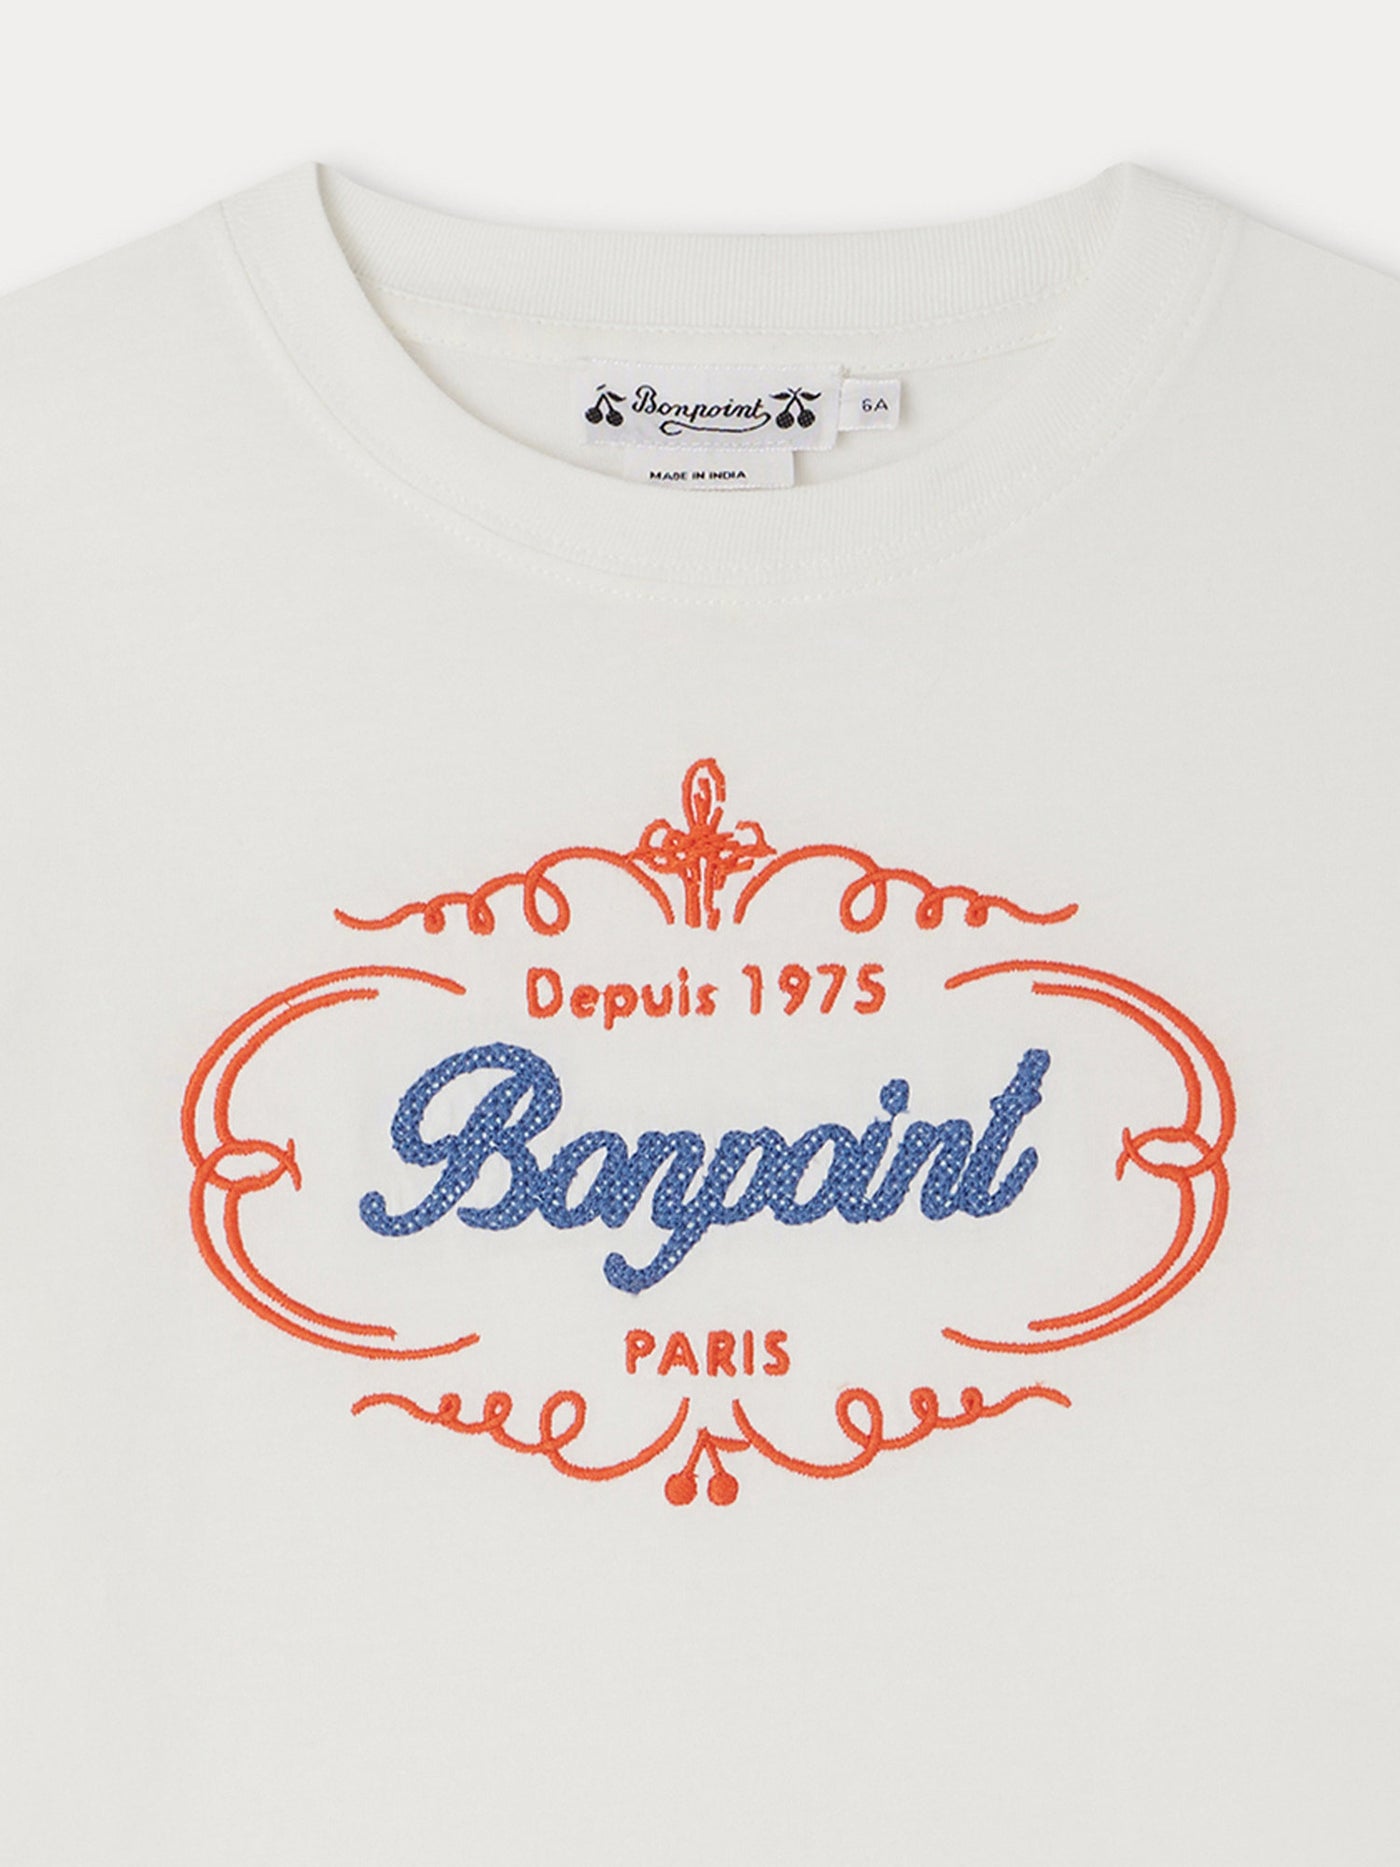 Thibald T-shirt with Bonpoint logo